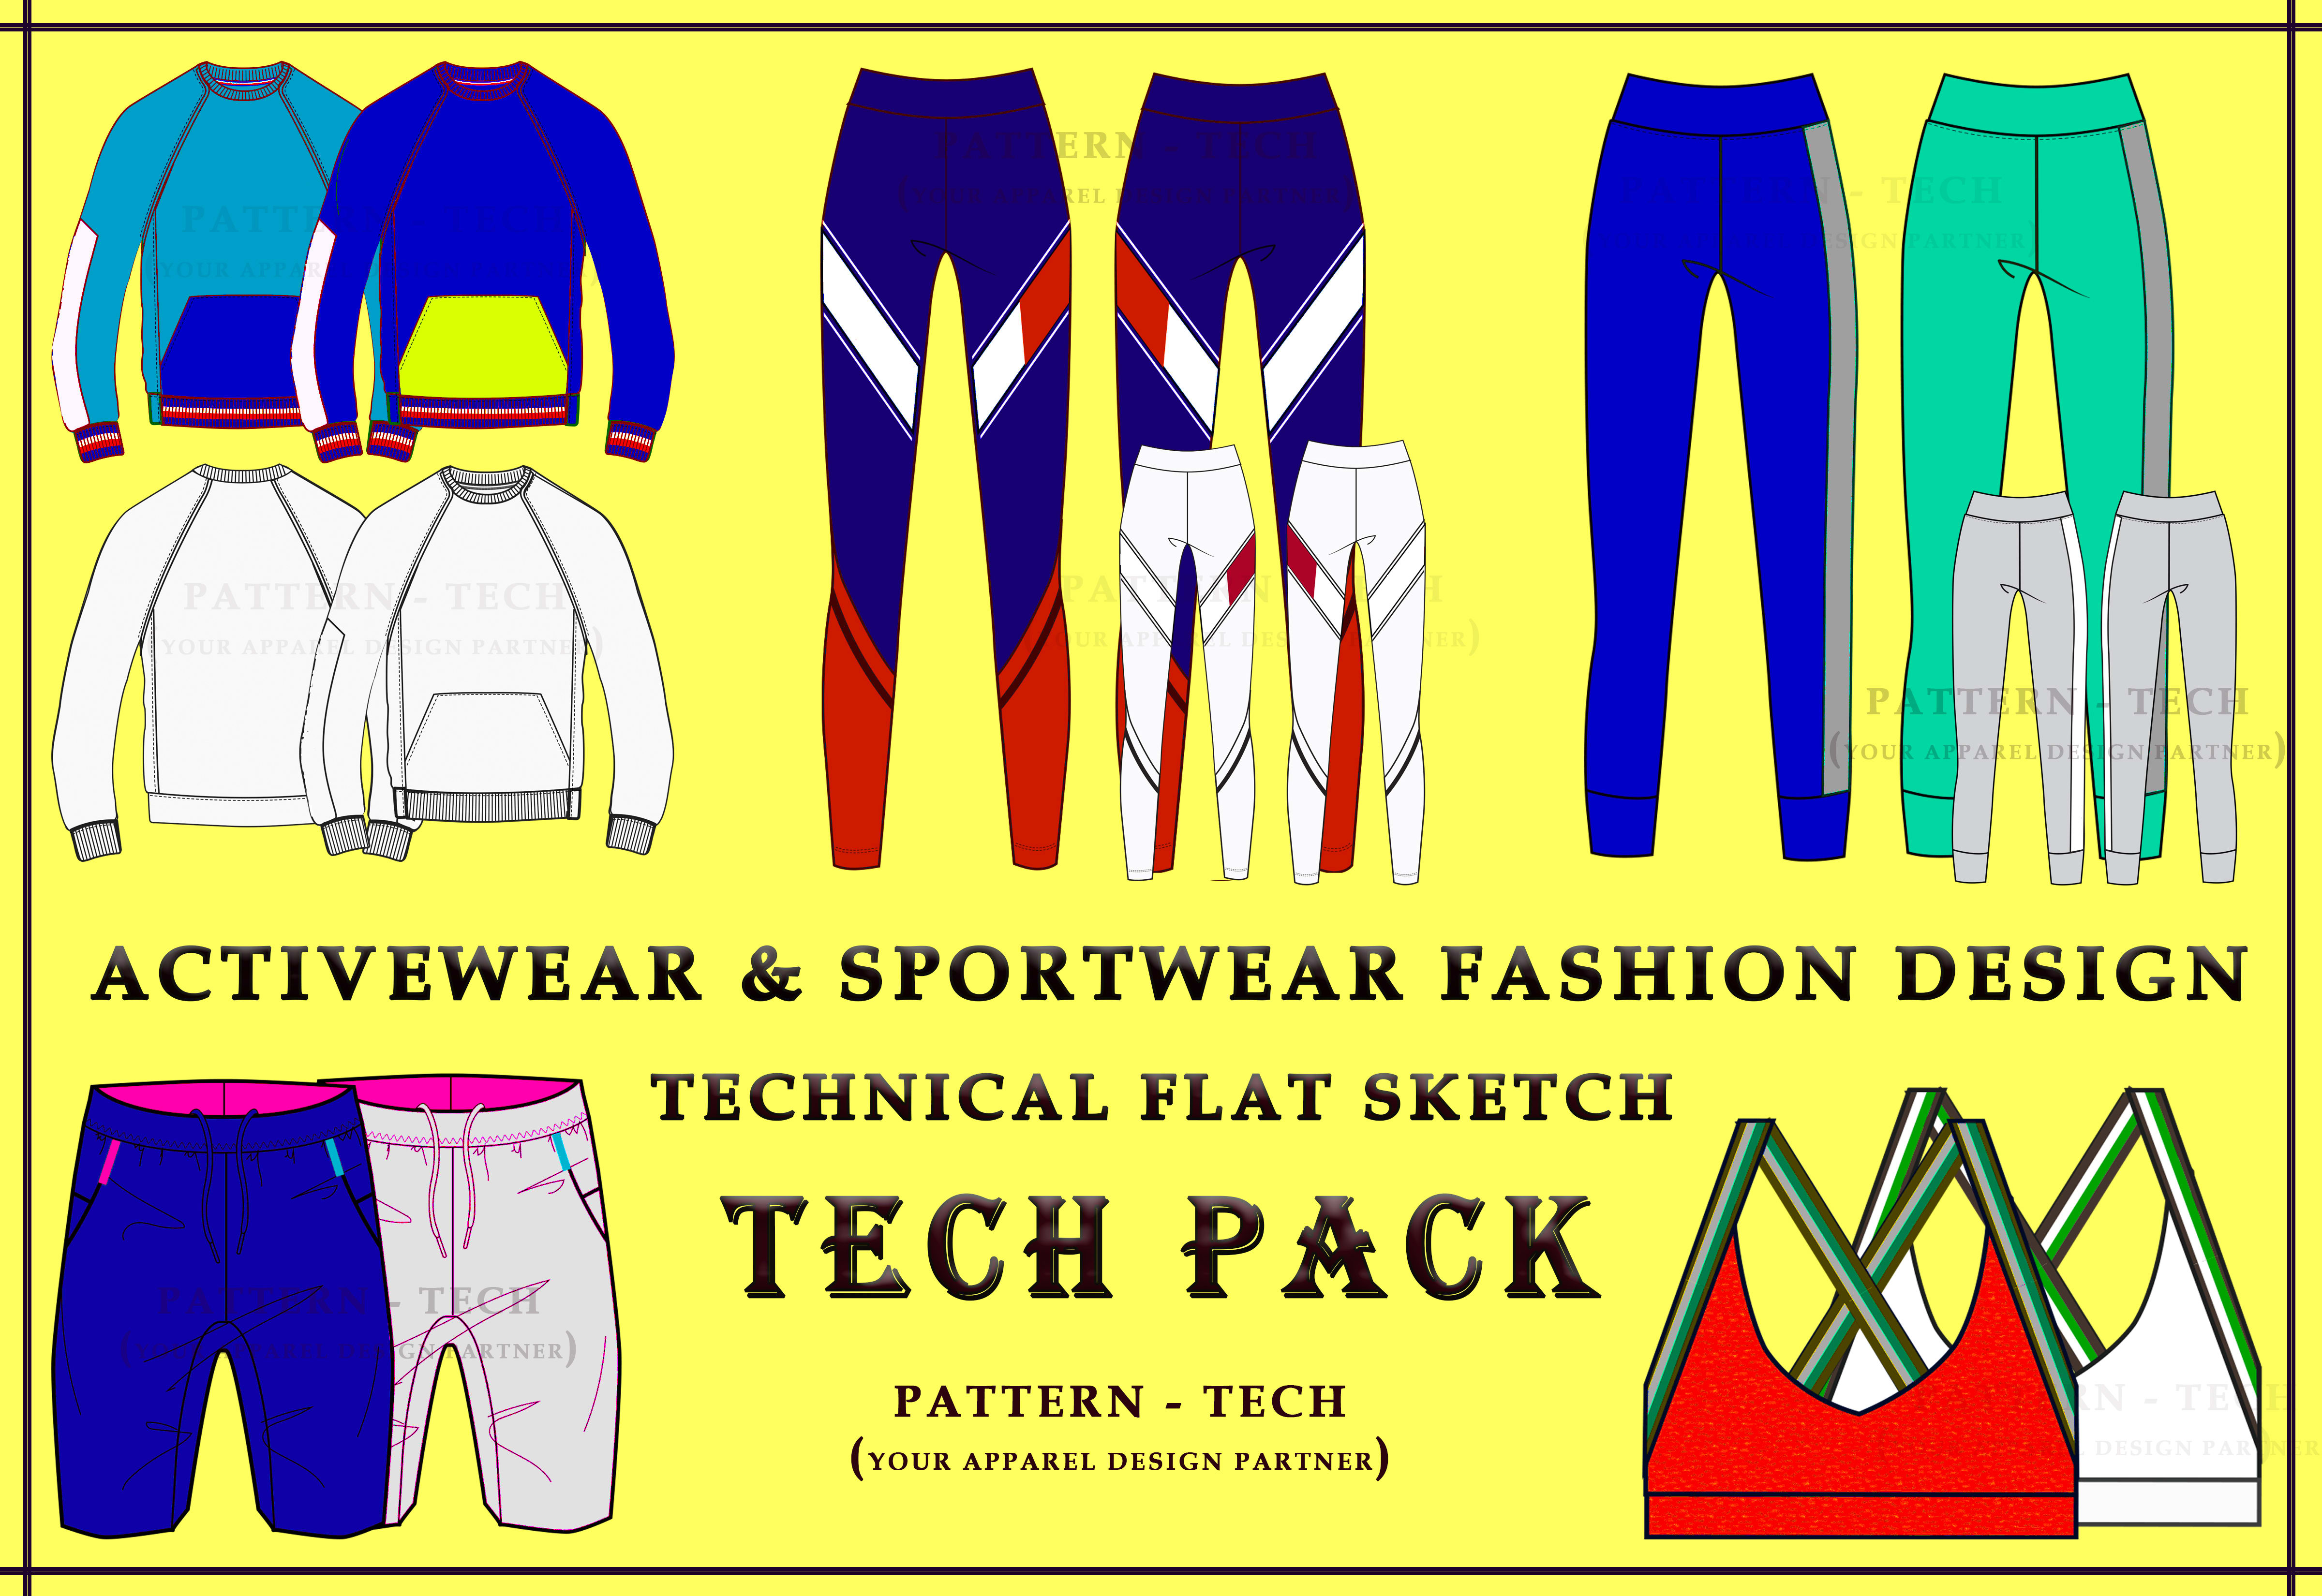 https://fiverr-res.cloudinary.com/images/q_auto,f_auto/gigs/192117969/original/5ca63e38f9fd112d84d4ea1861eadbfef8c58dfe/design-professional-activewear-and-sportswear-tech-pack.jpg